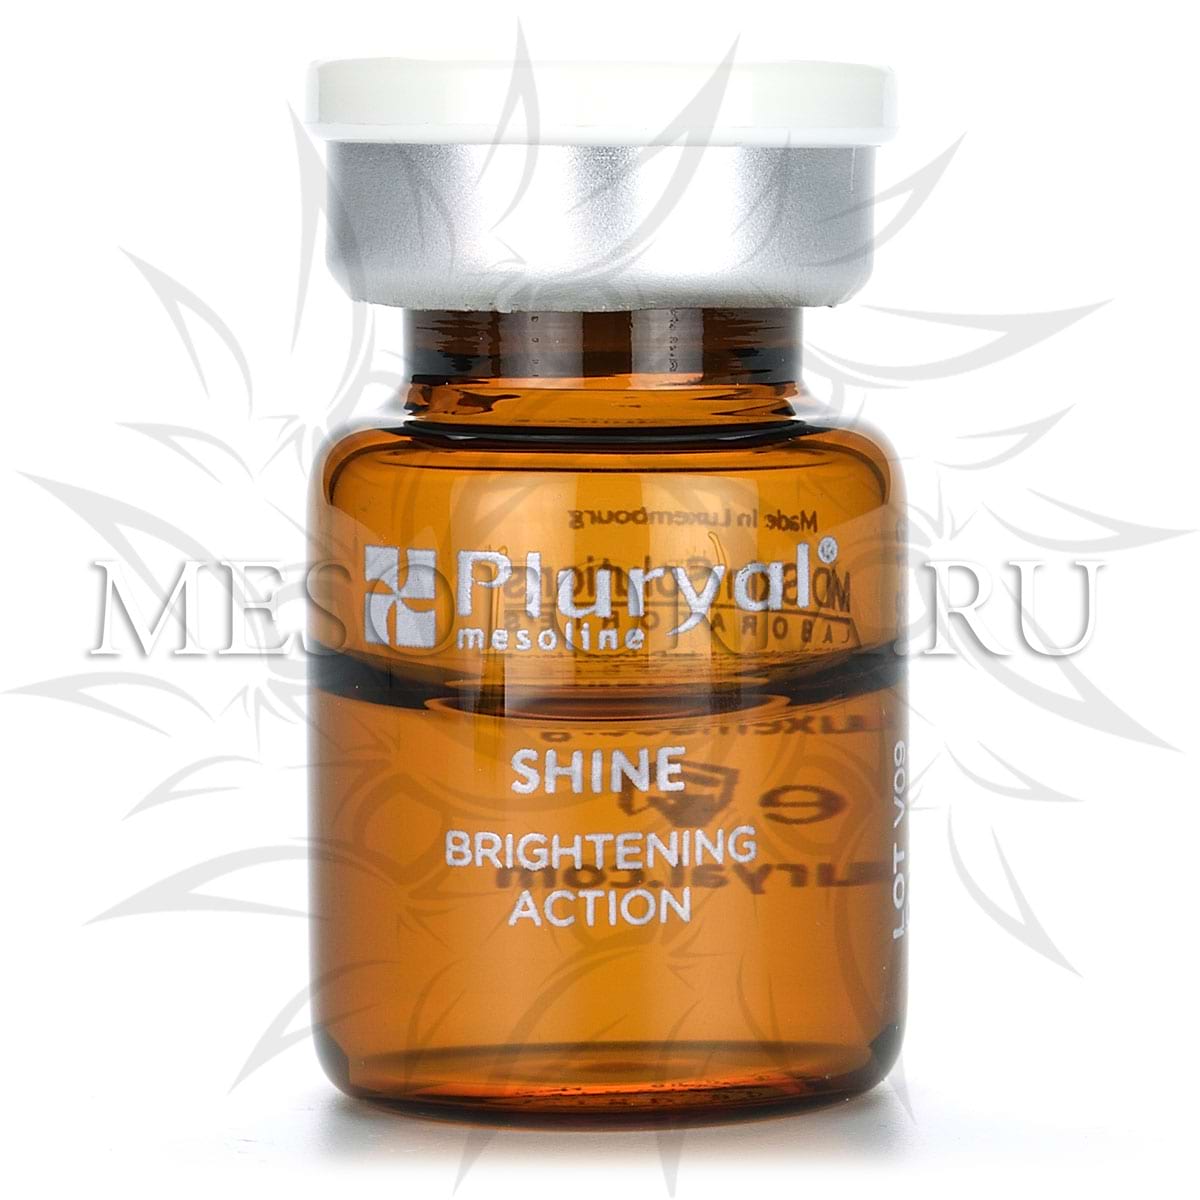 Shine Action Eclaircissante (Пигментация, веснушки), Mesoline Pluryal (Мезолайн Плюриал), 5 мл